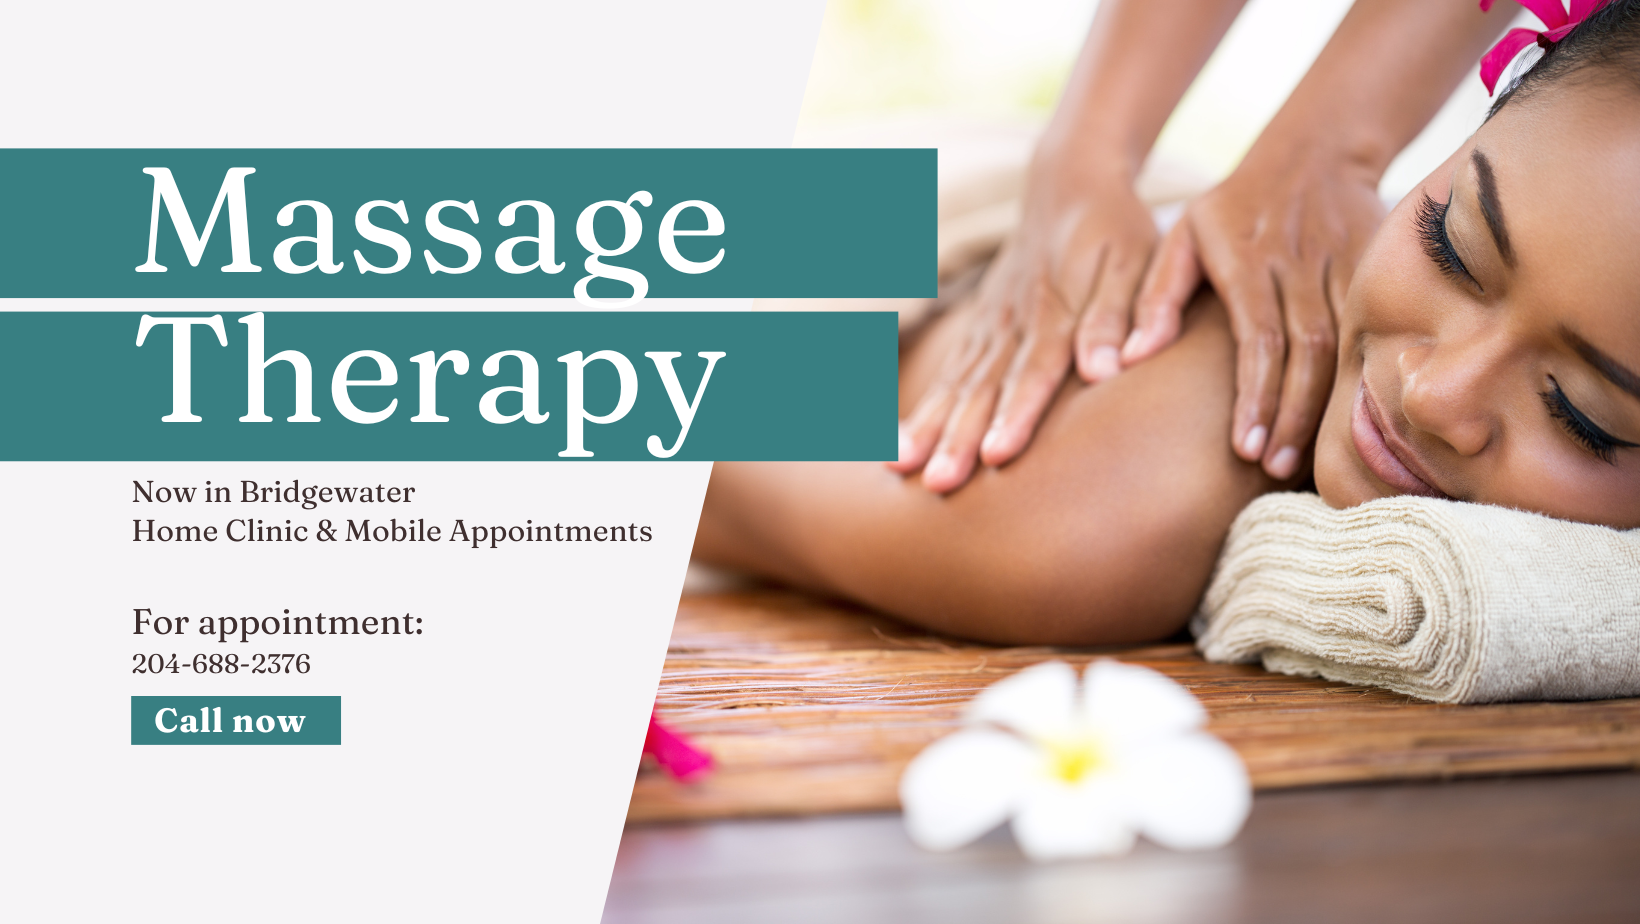 Morso Therapy Clinic (Massage)